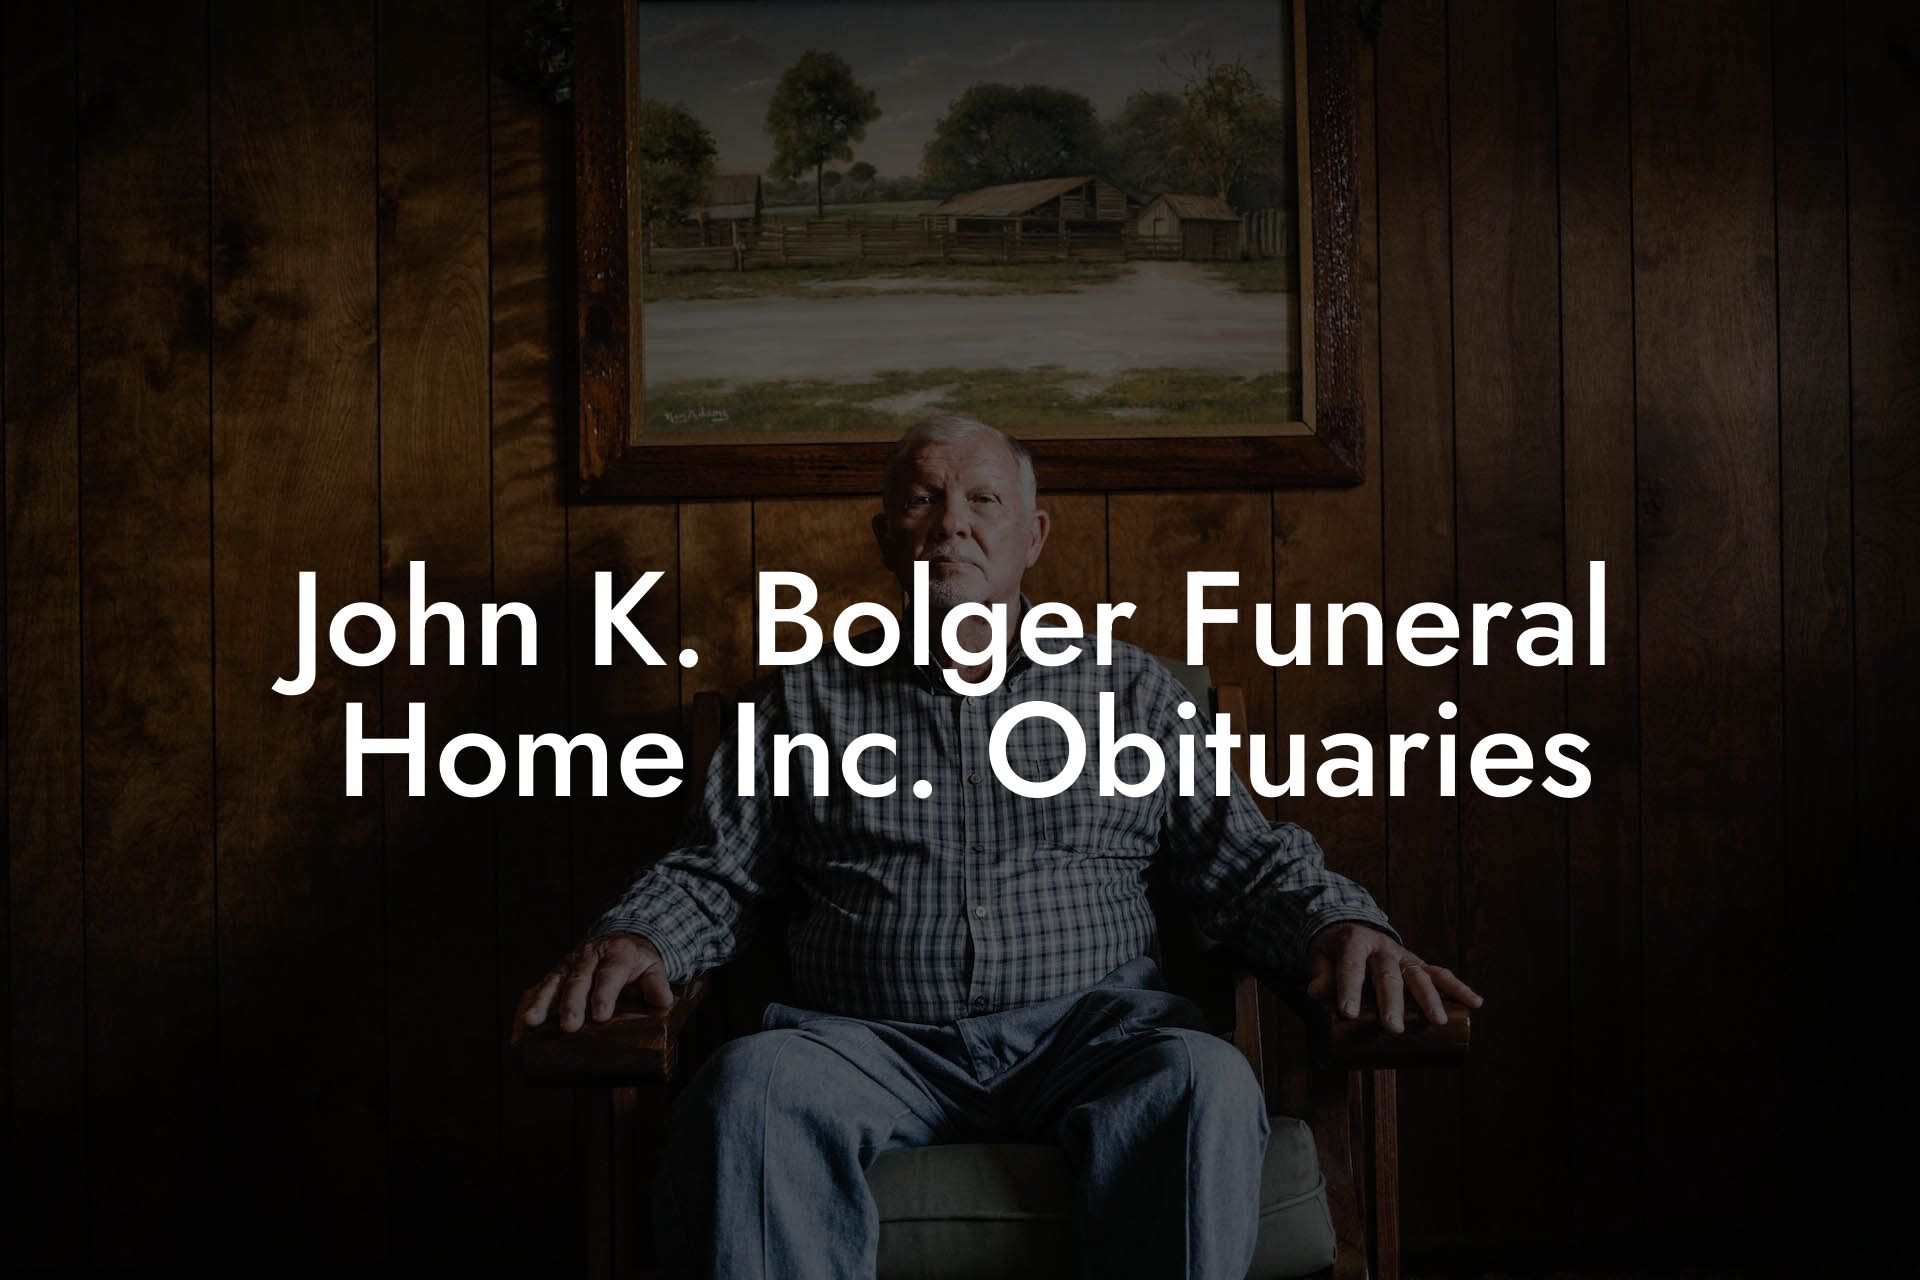 John K. Bolger Funeral Home Inc. Obituaries